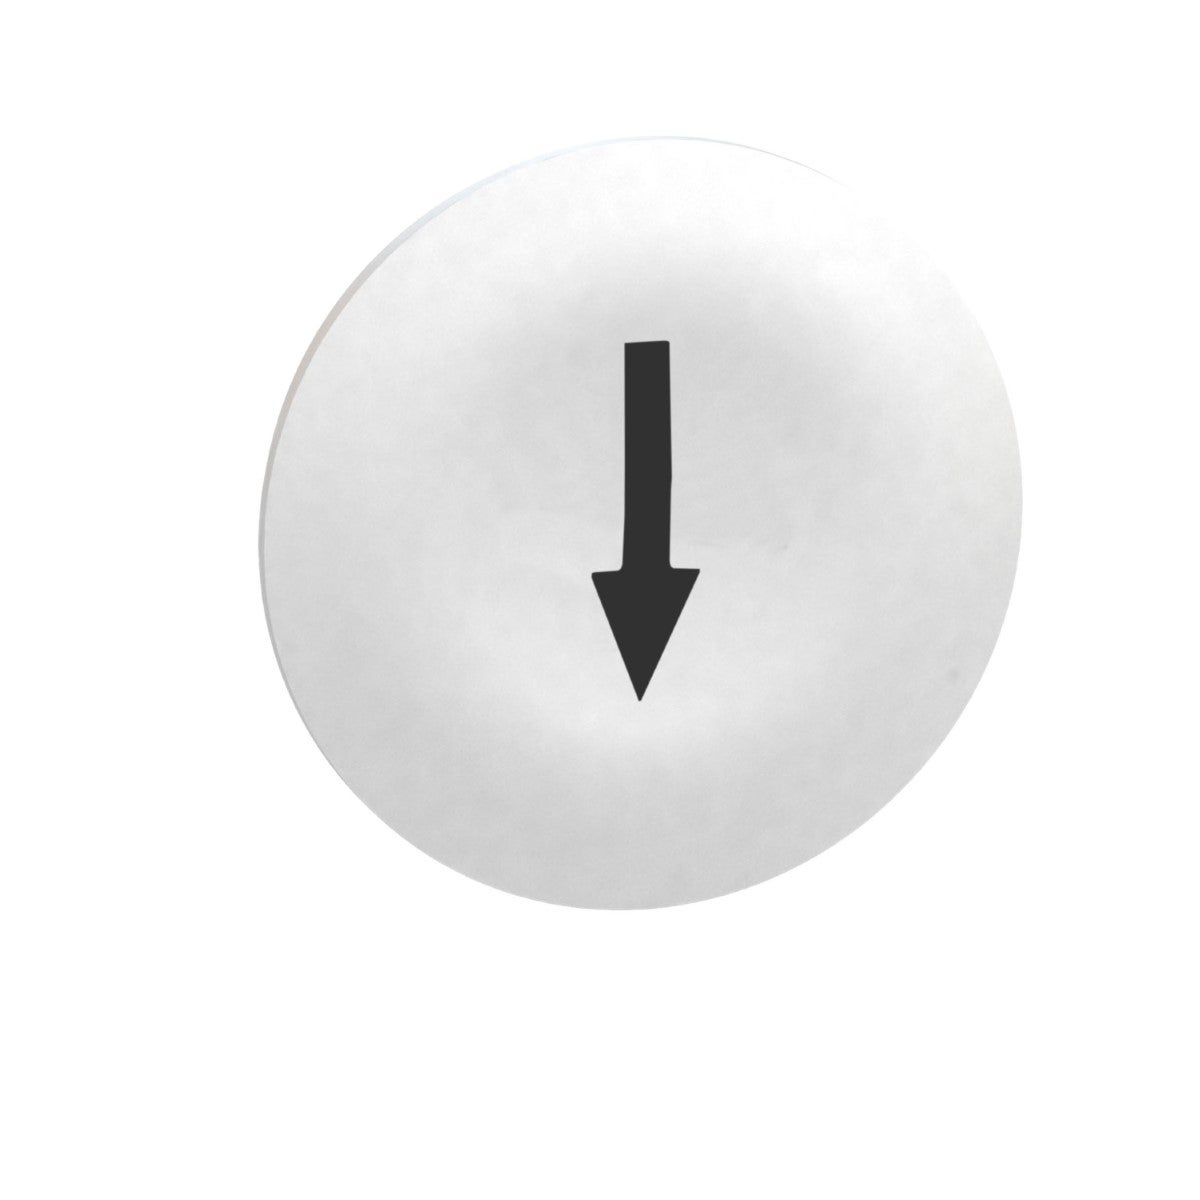 Cap for multiple-headed push button, Harmony XB4, wireless, plastic, white, 22mm, black marked arrow